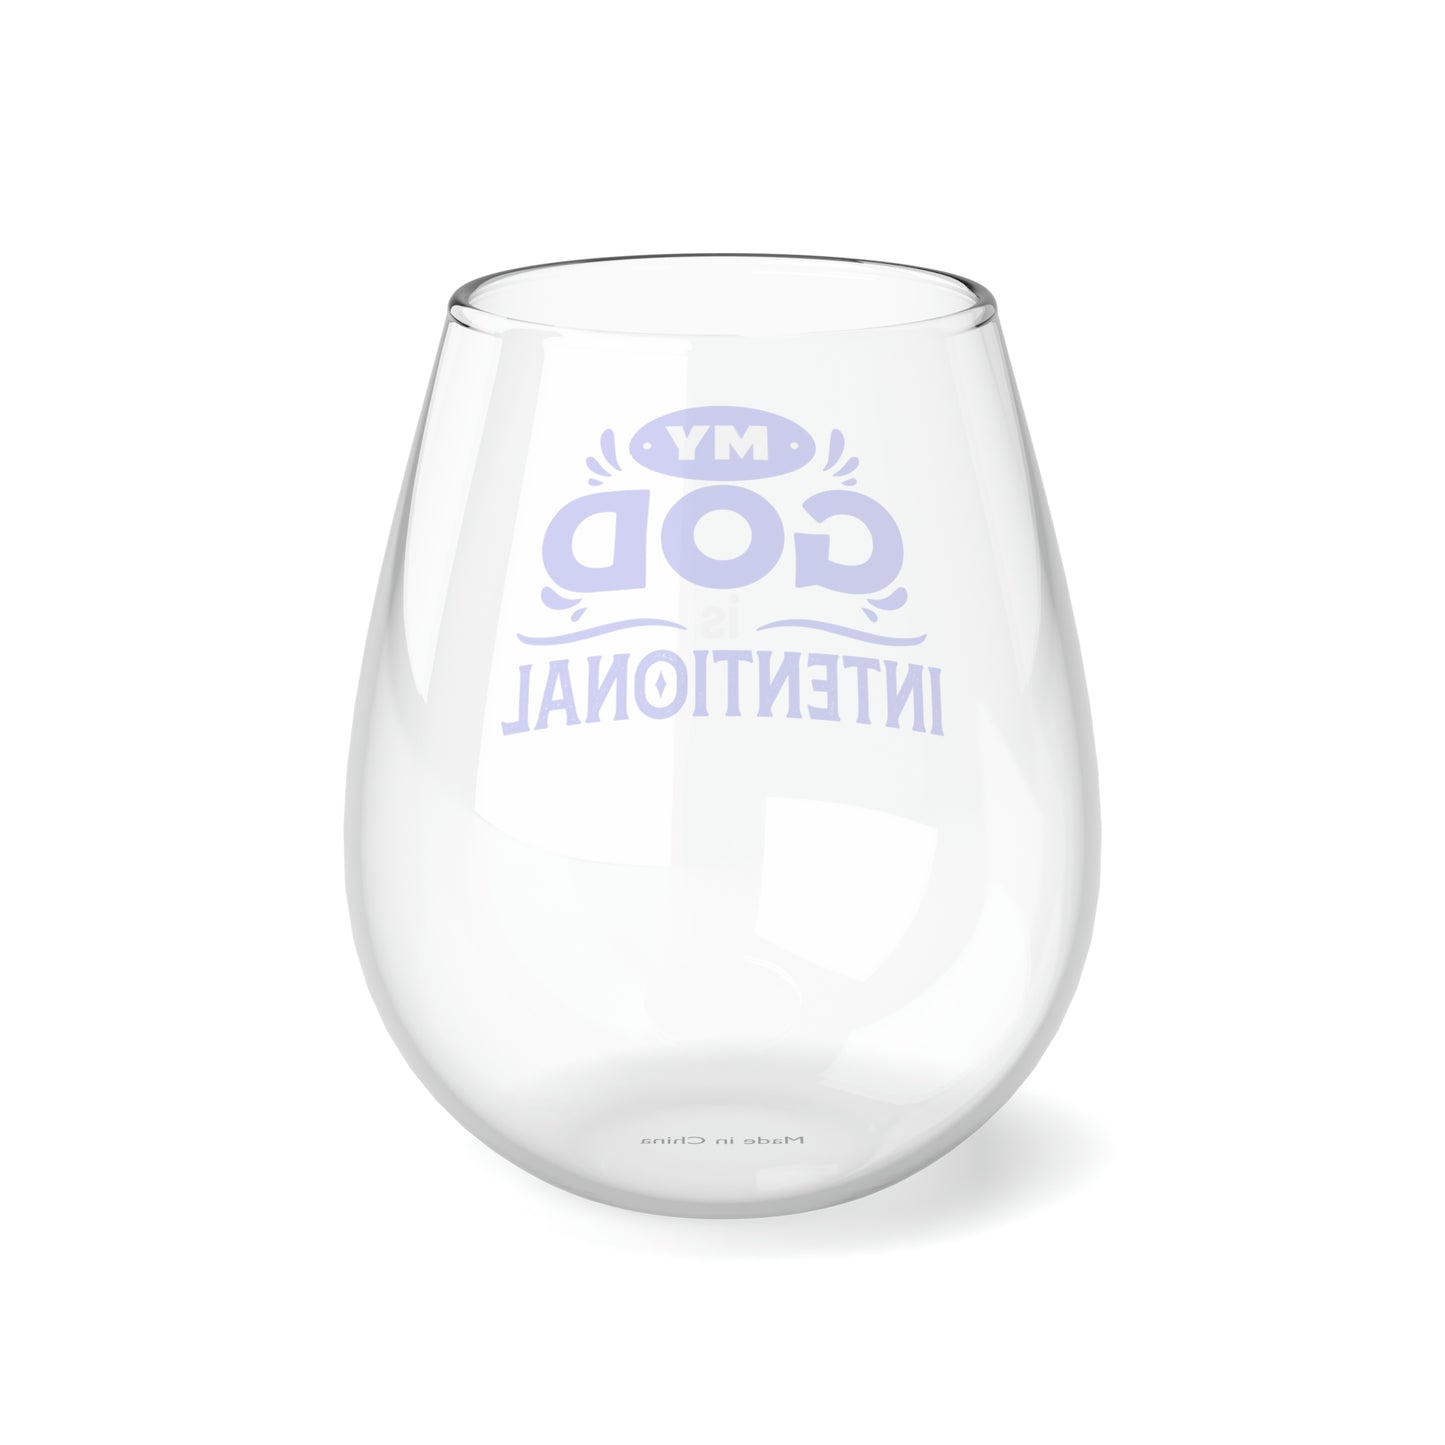 My God Is Intentional Stemless Wine Glass, 11.75oz